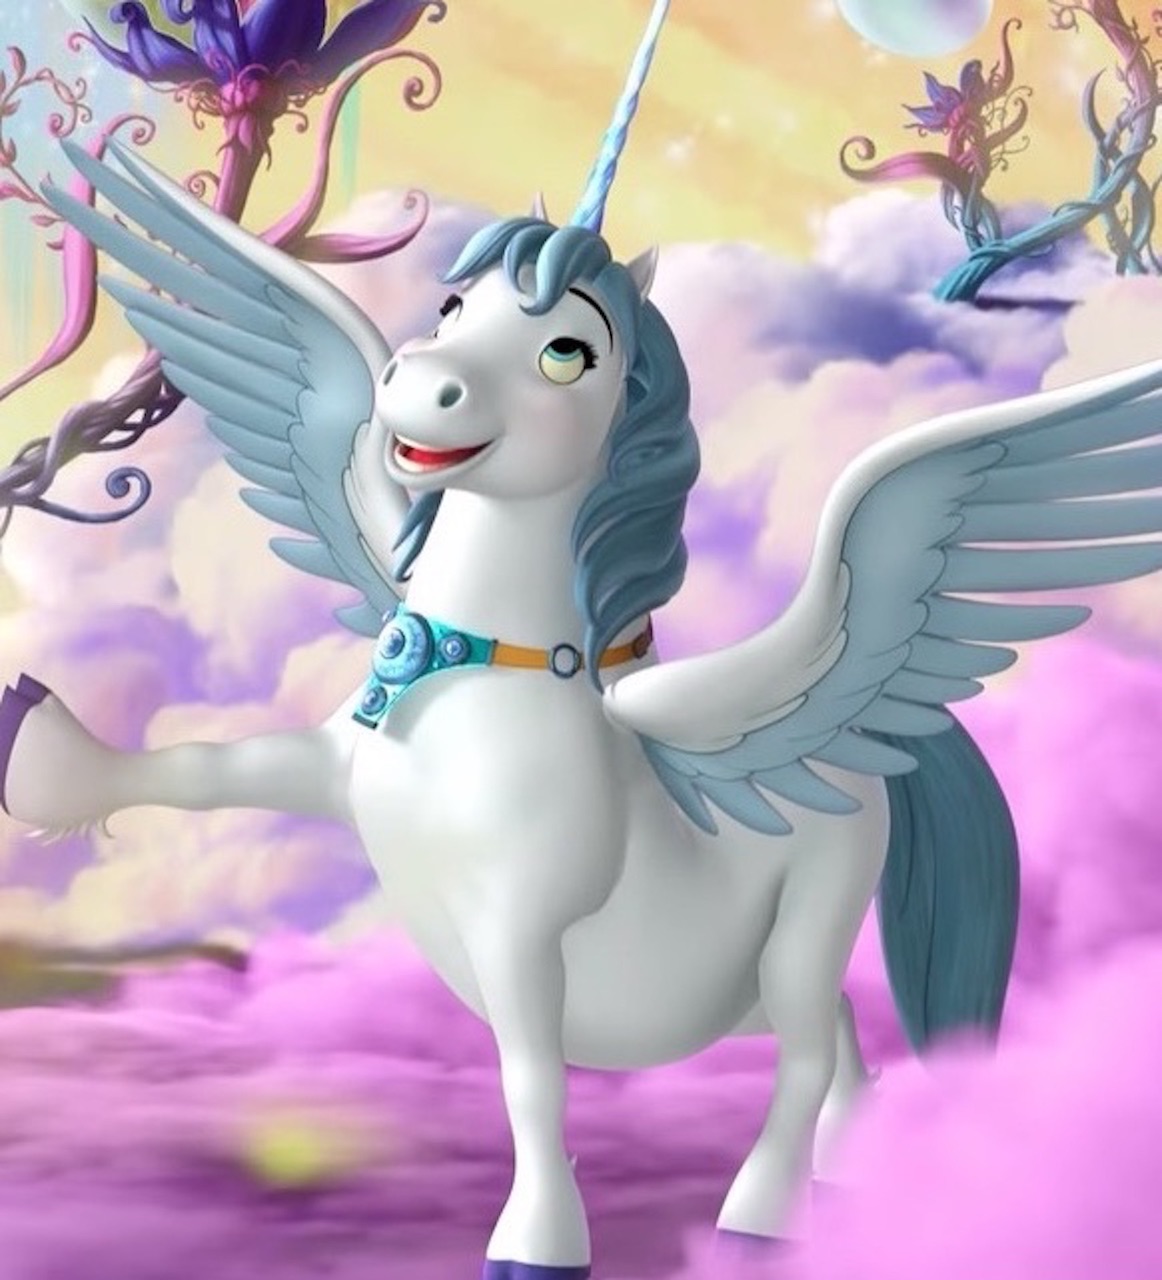 sofia the first magic sparkle skye unicorn